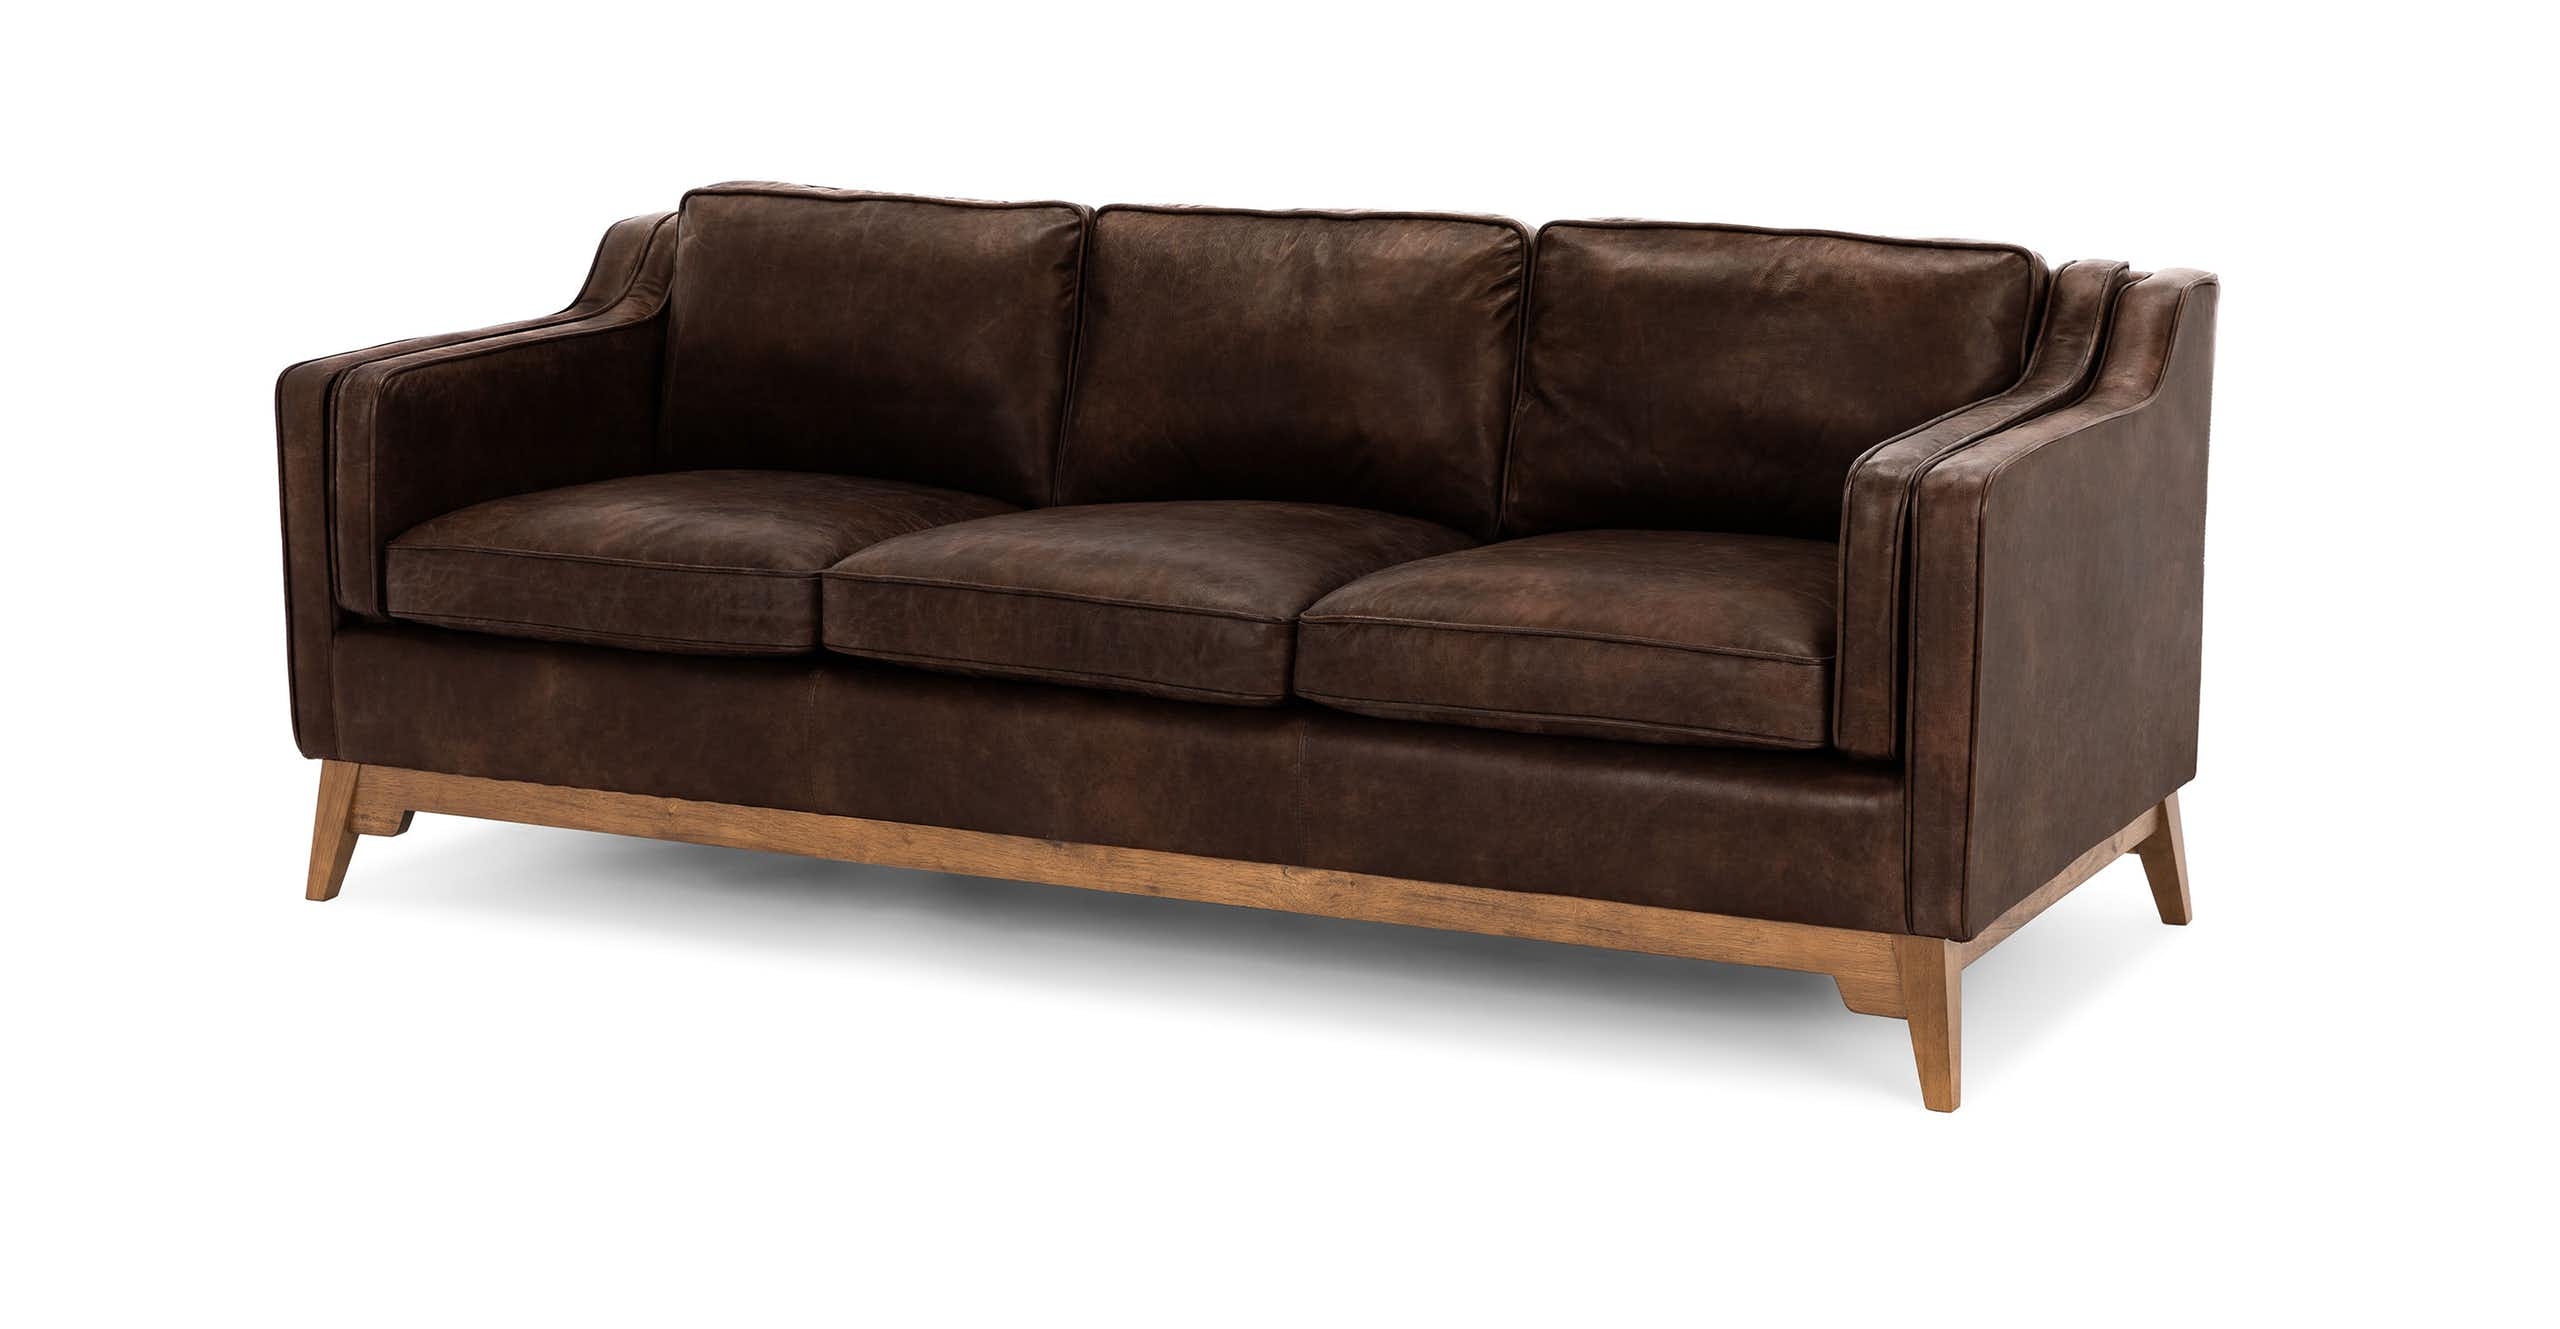 Worthington Sofa - OXFORD BROWN AND HONEY OAK - Image 2